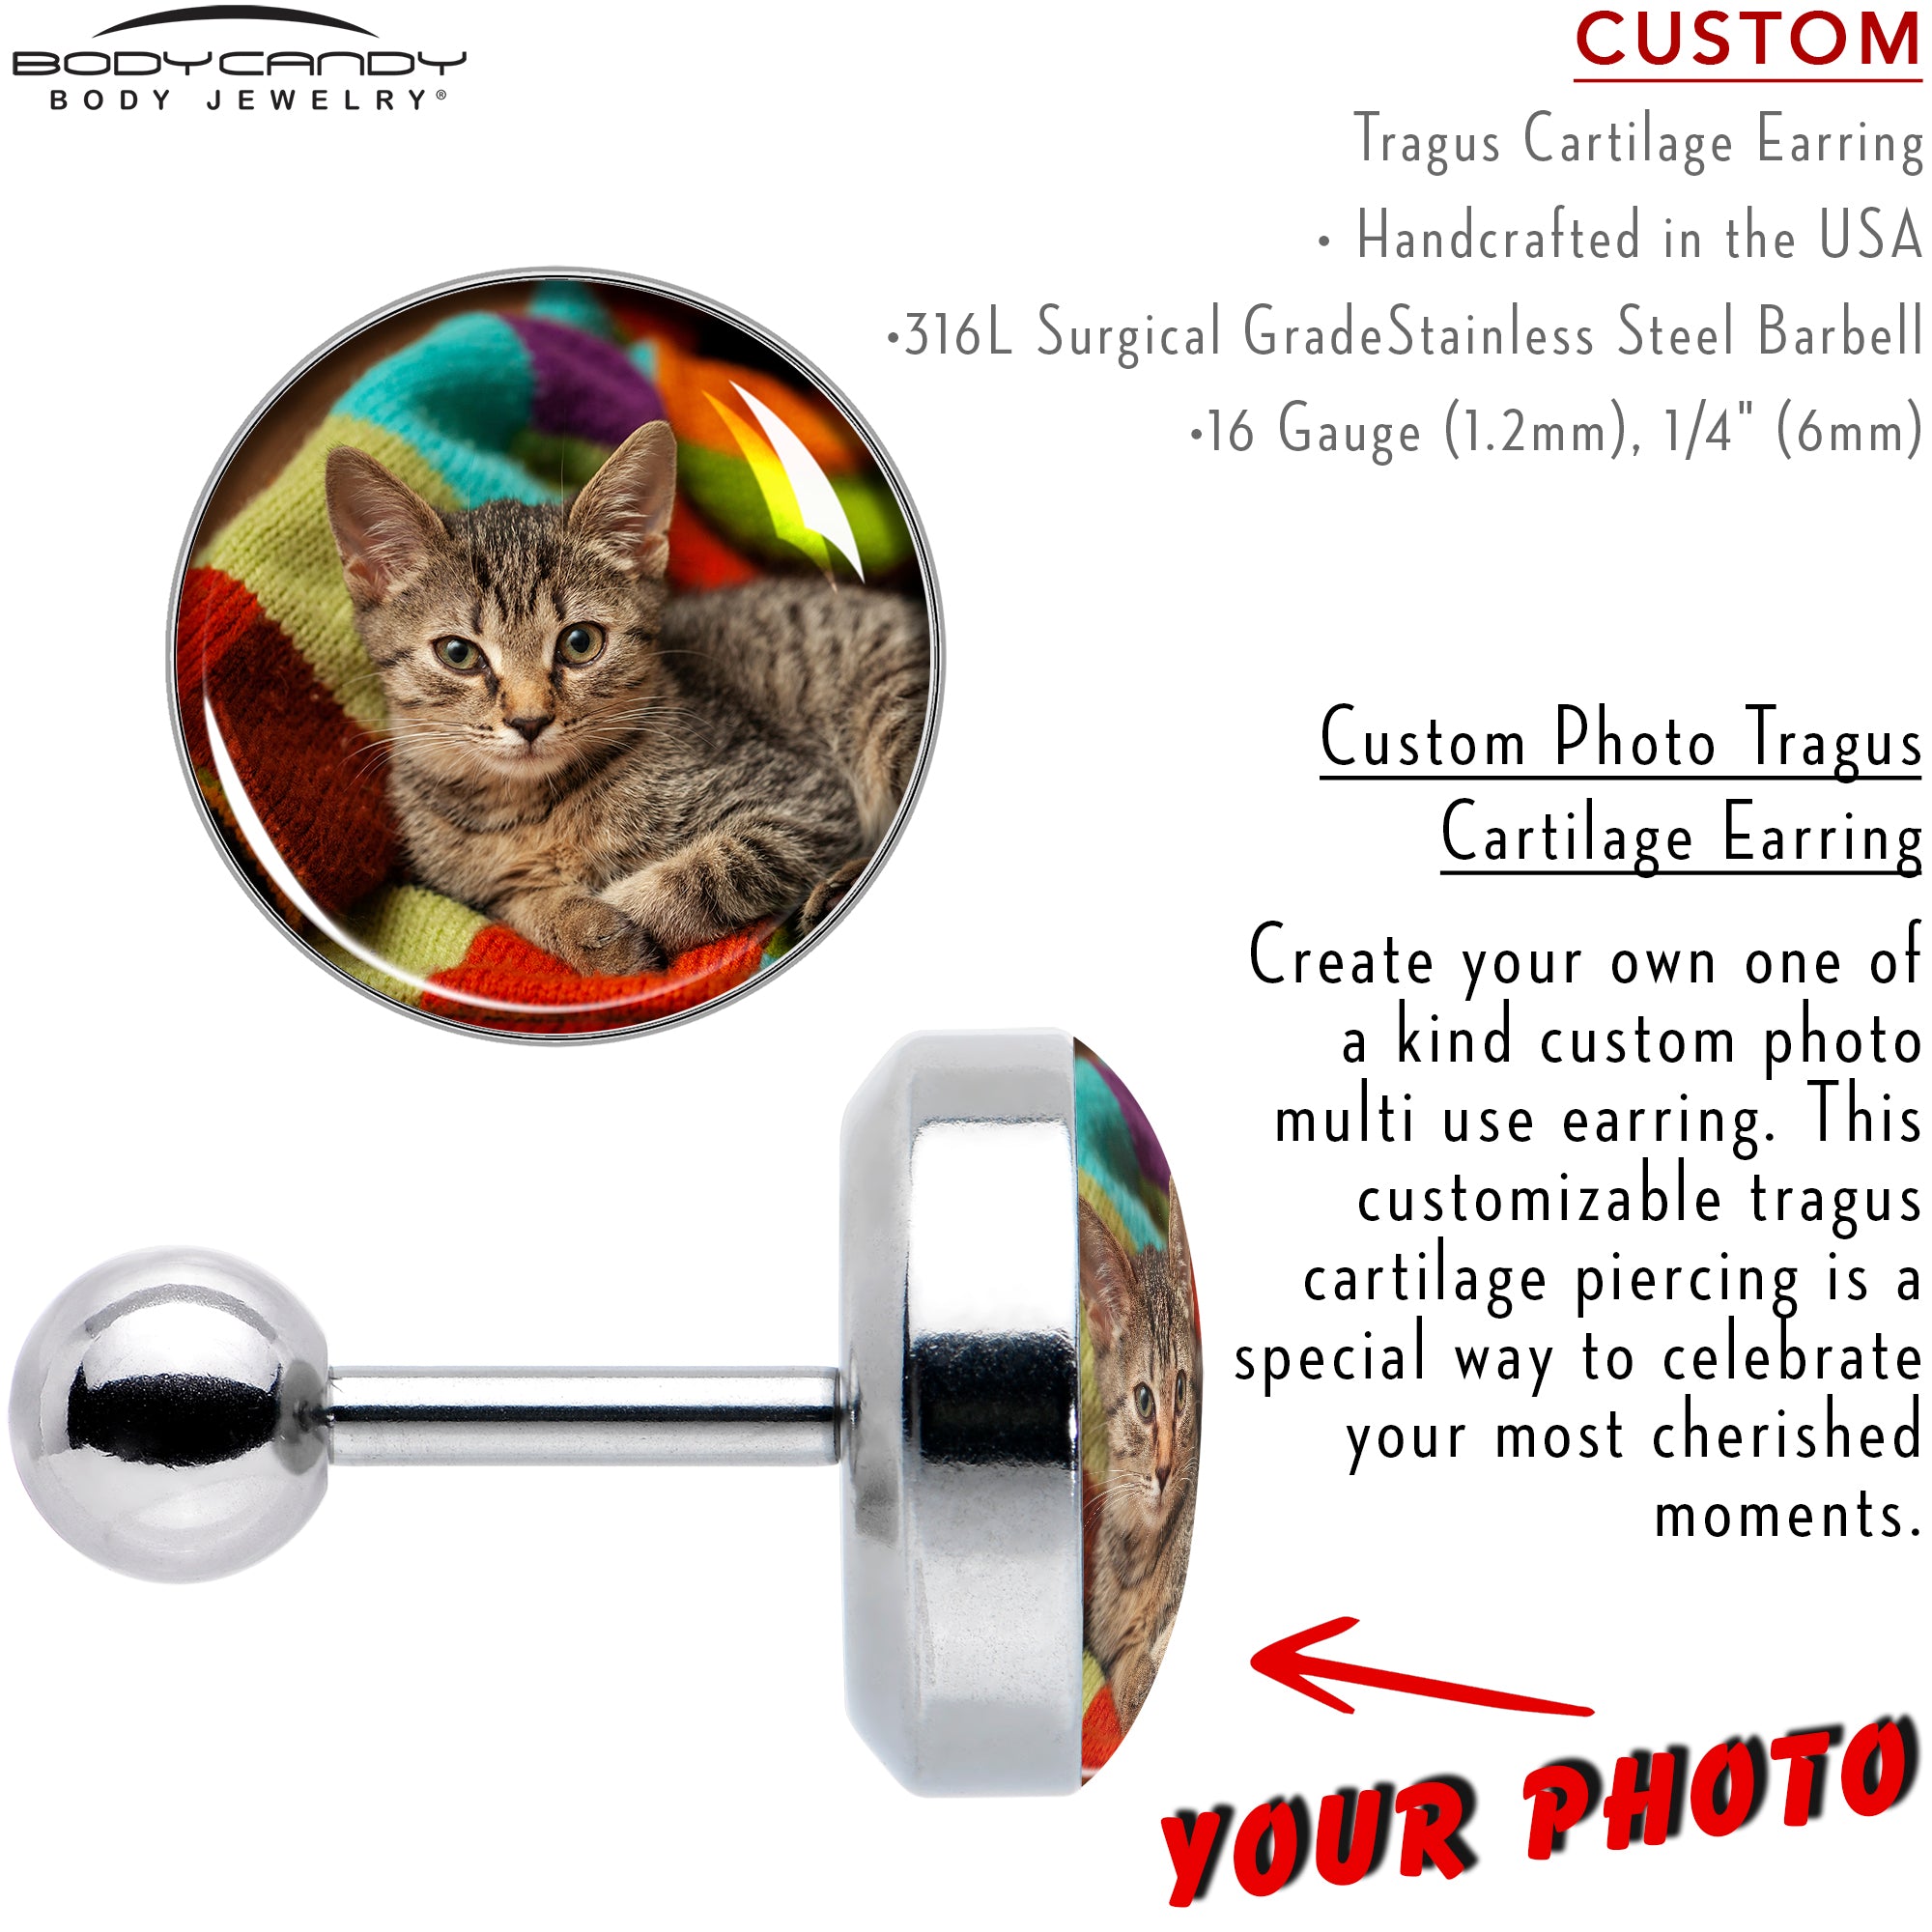 Custom Full Color Photo Tragus Cartilage Earring